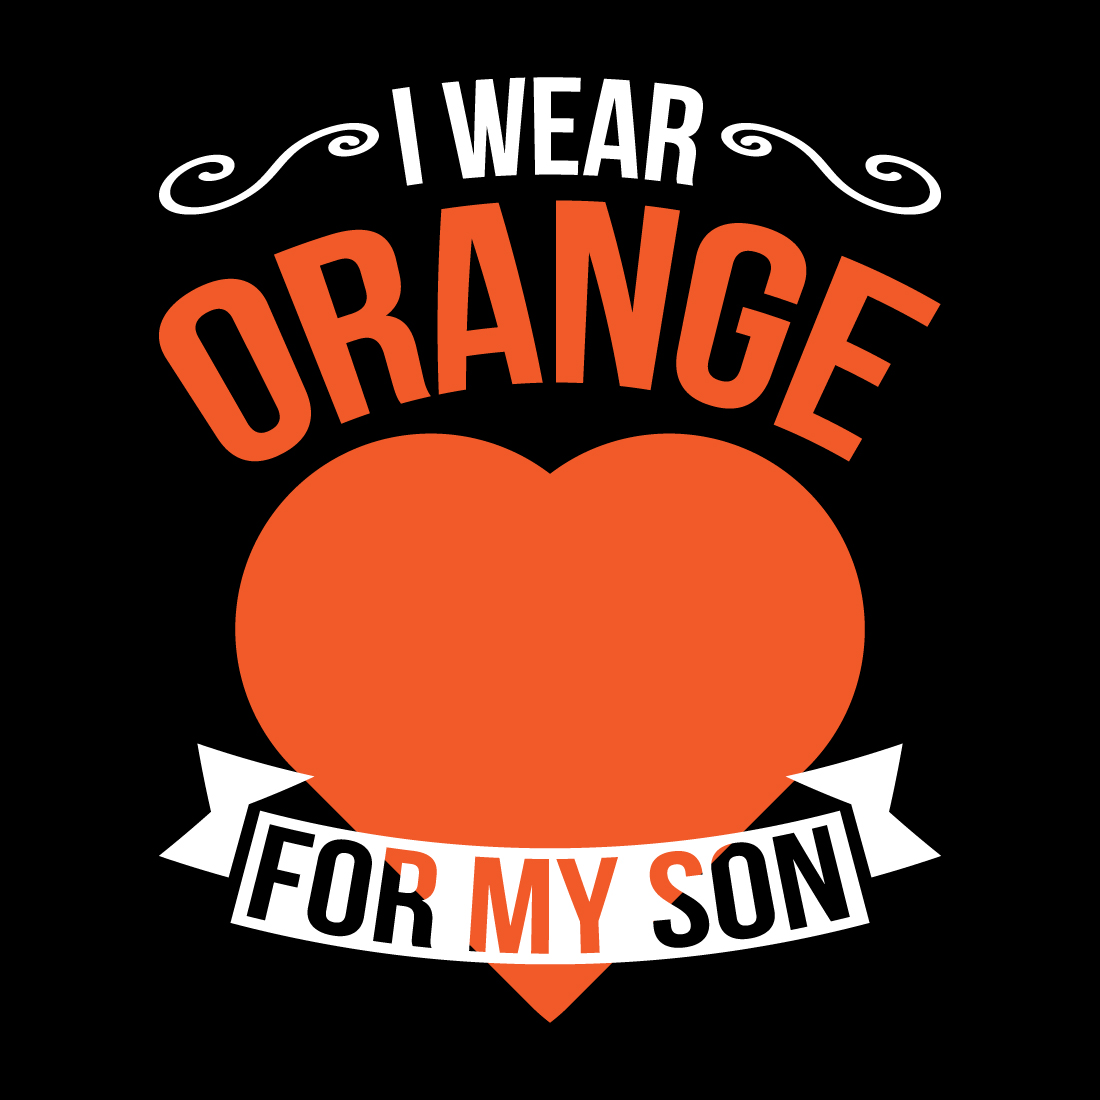 I wear orange for my son.